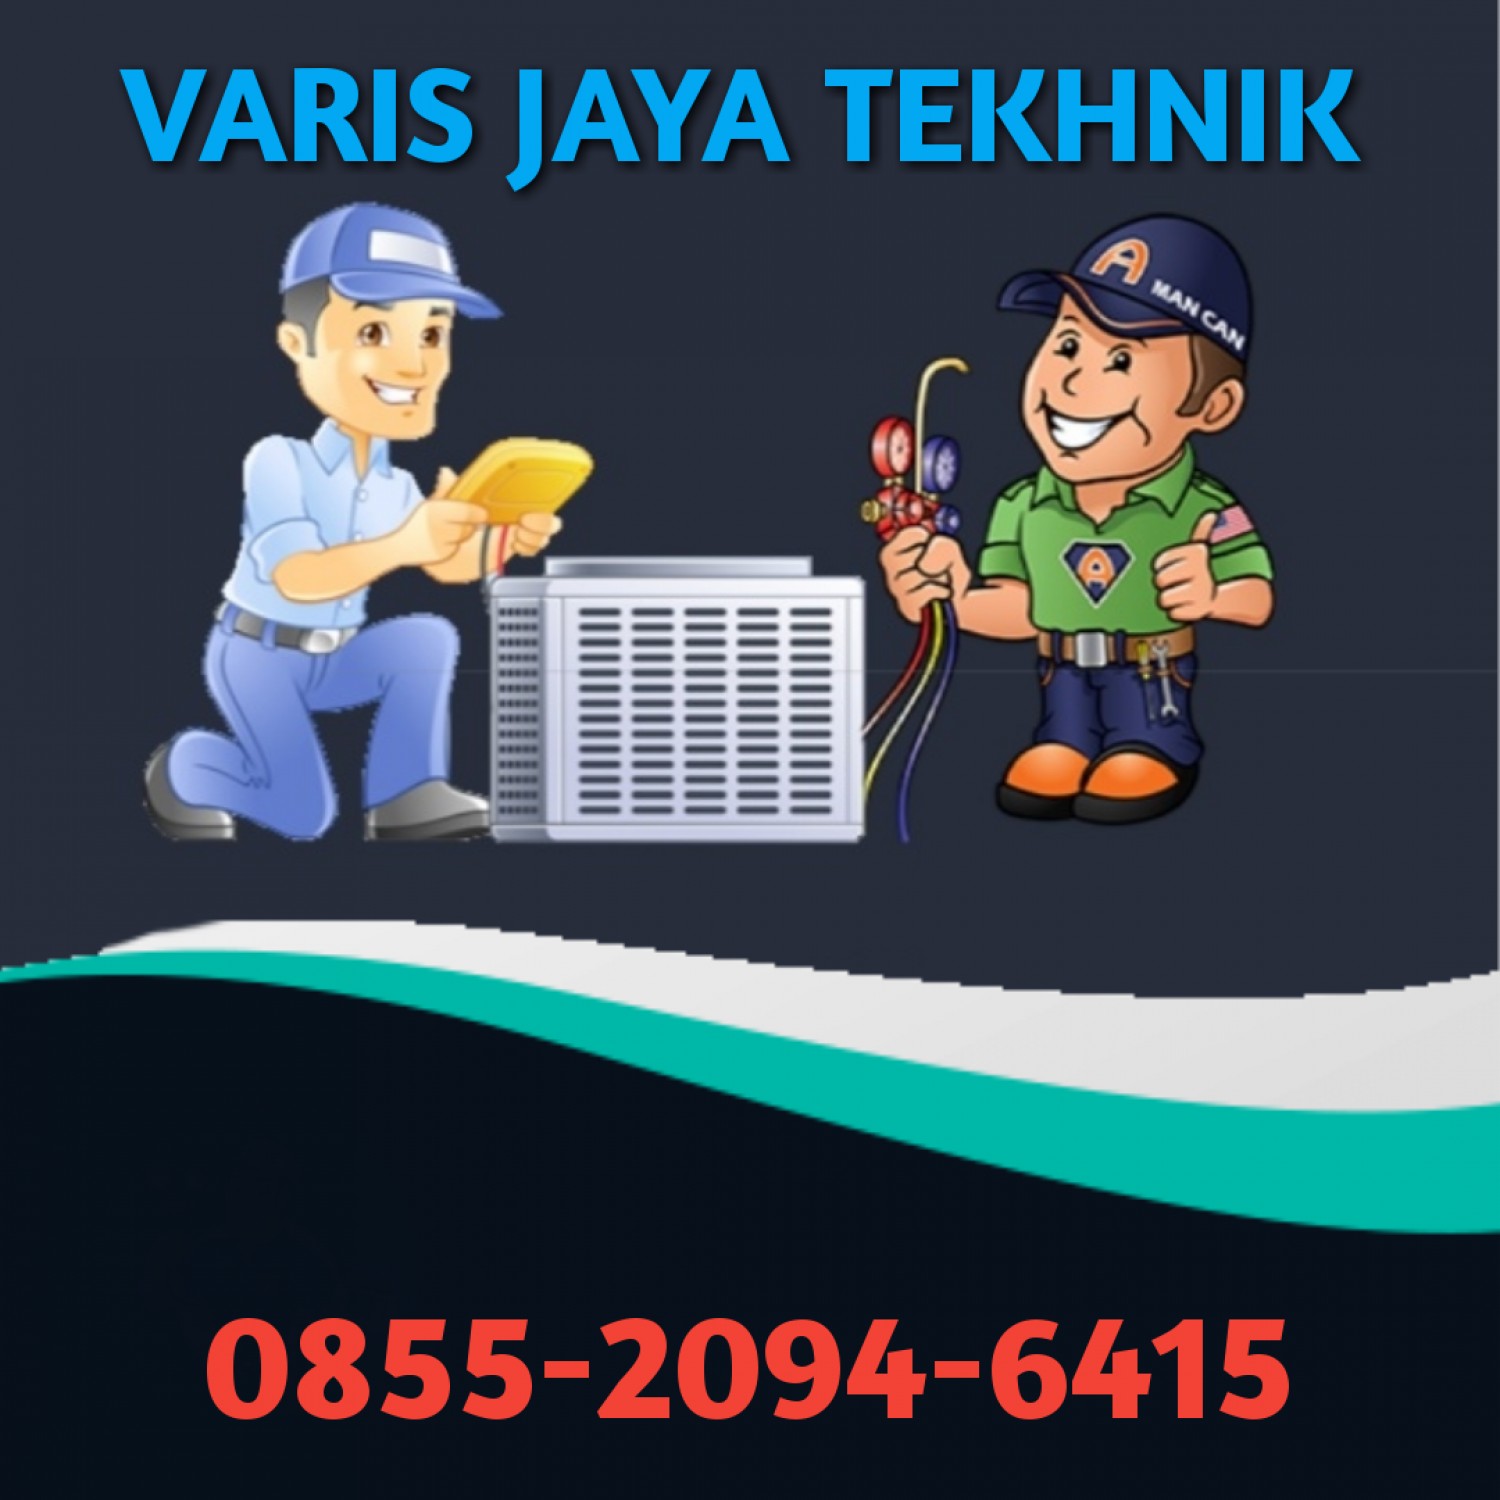 SERVICE AC JAKARTA BARAT 0855-2094-6415